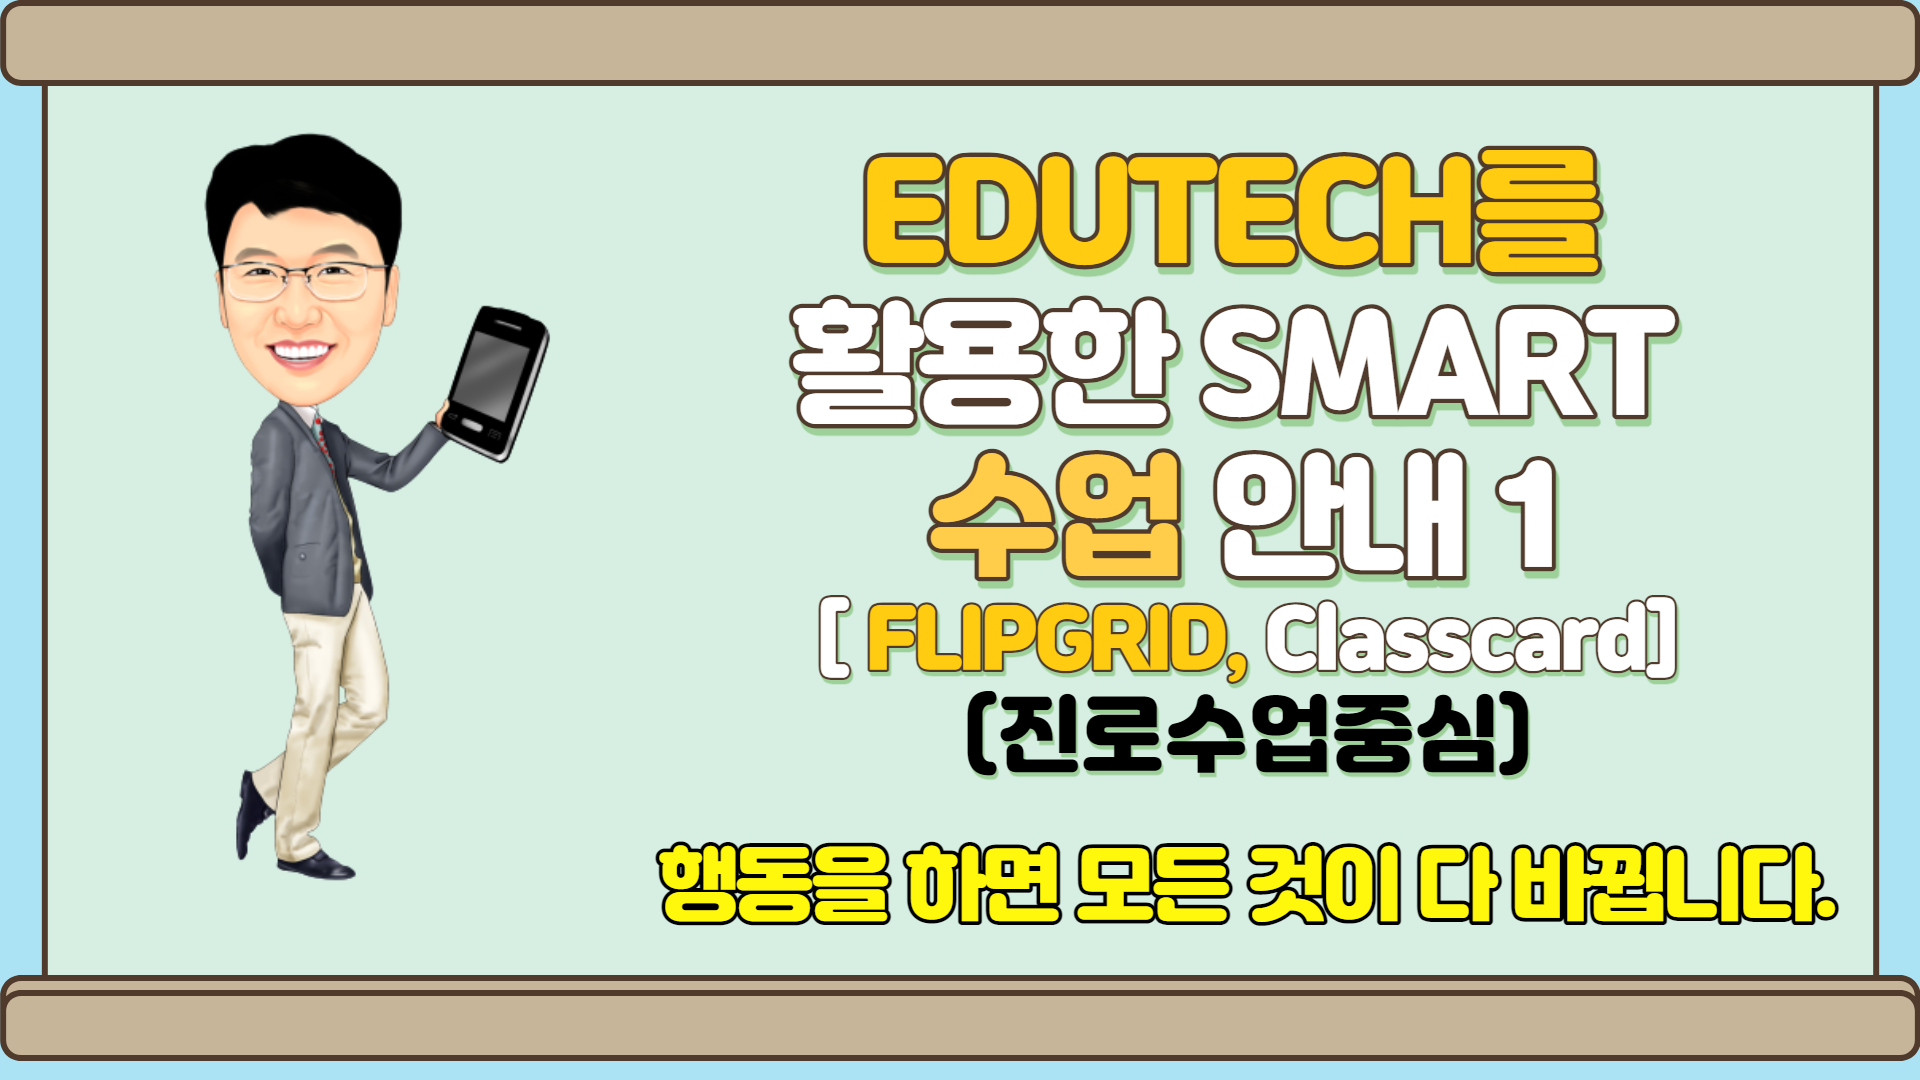 EDUTECH를 활용한 smart수업 방법 안내1 (Flipgrid,Classcard) 20:00~21:50